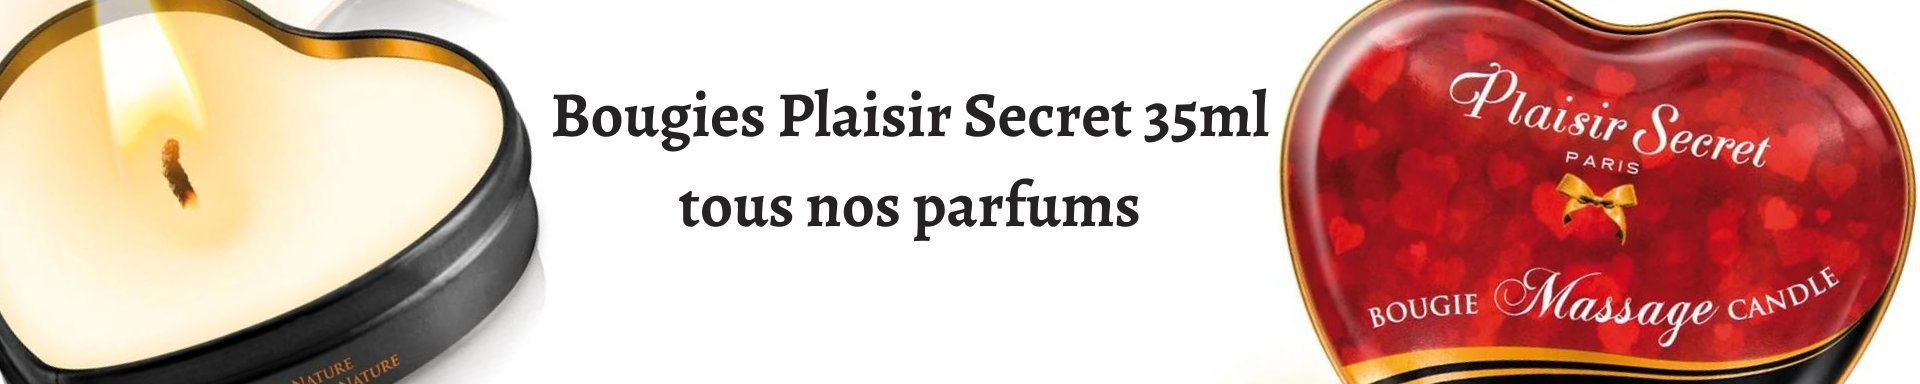 Bougies plaisir secret 35ml  - tous nos parfums - Oh My God'Z